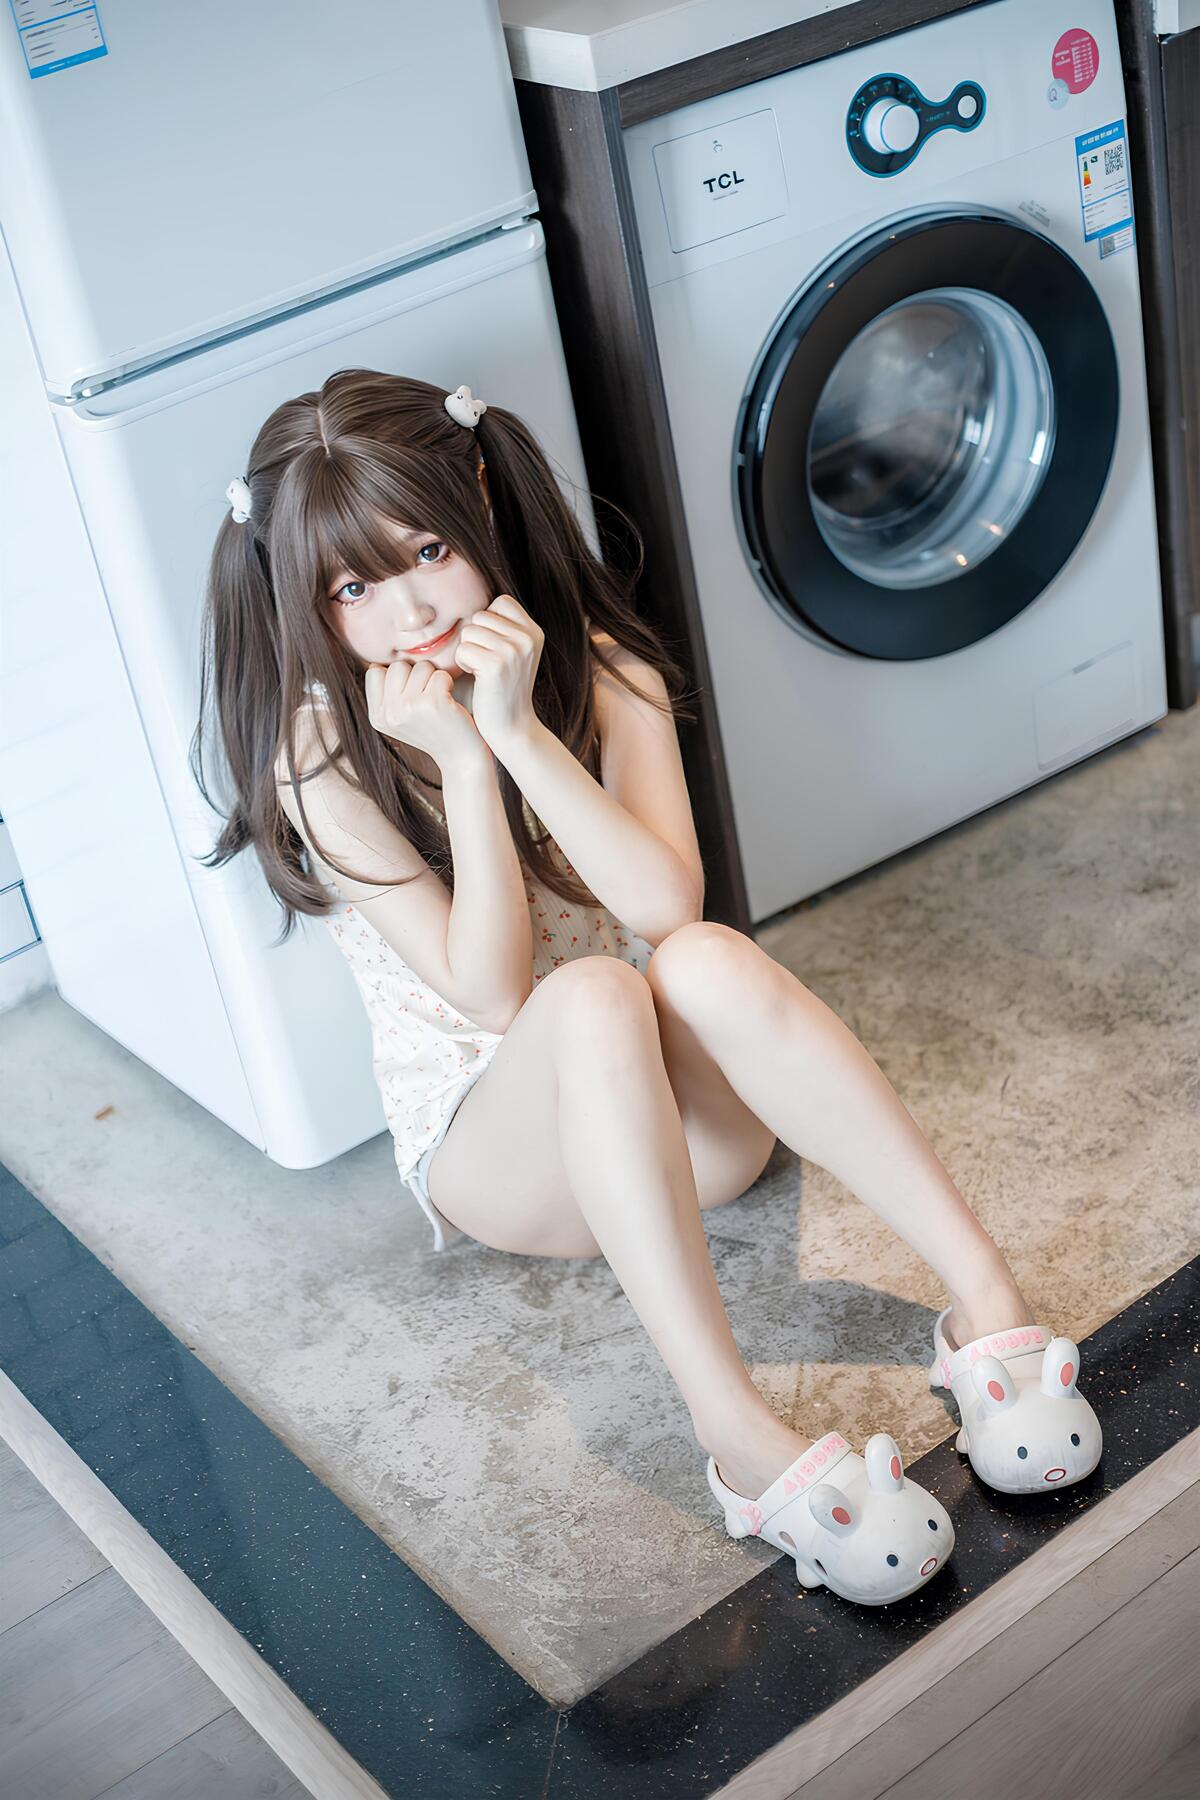 A girl and a washing machine